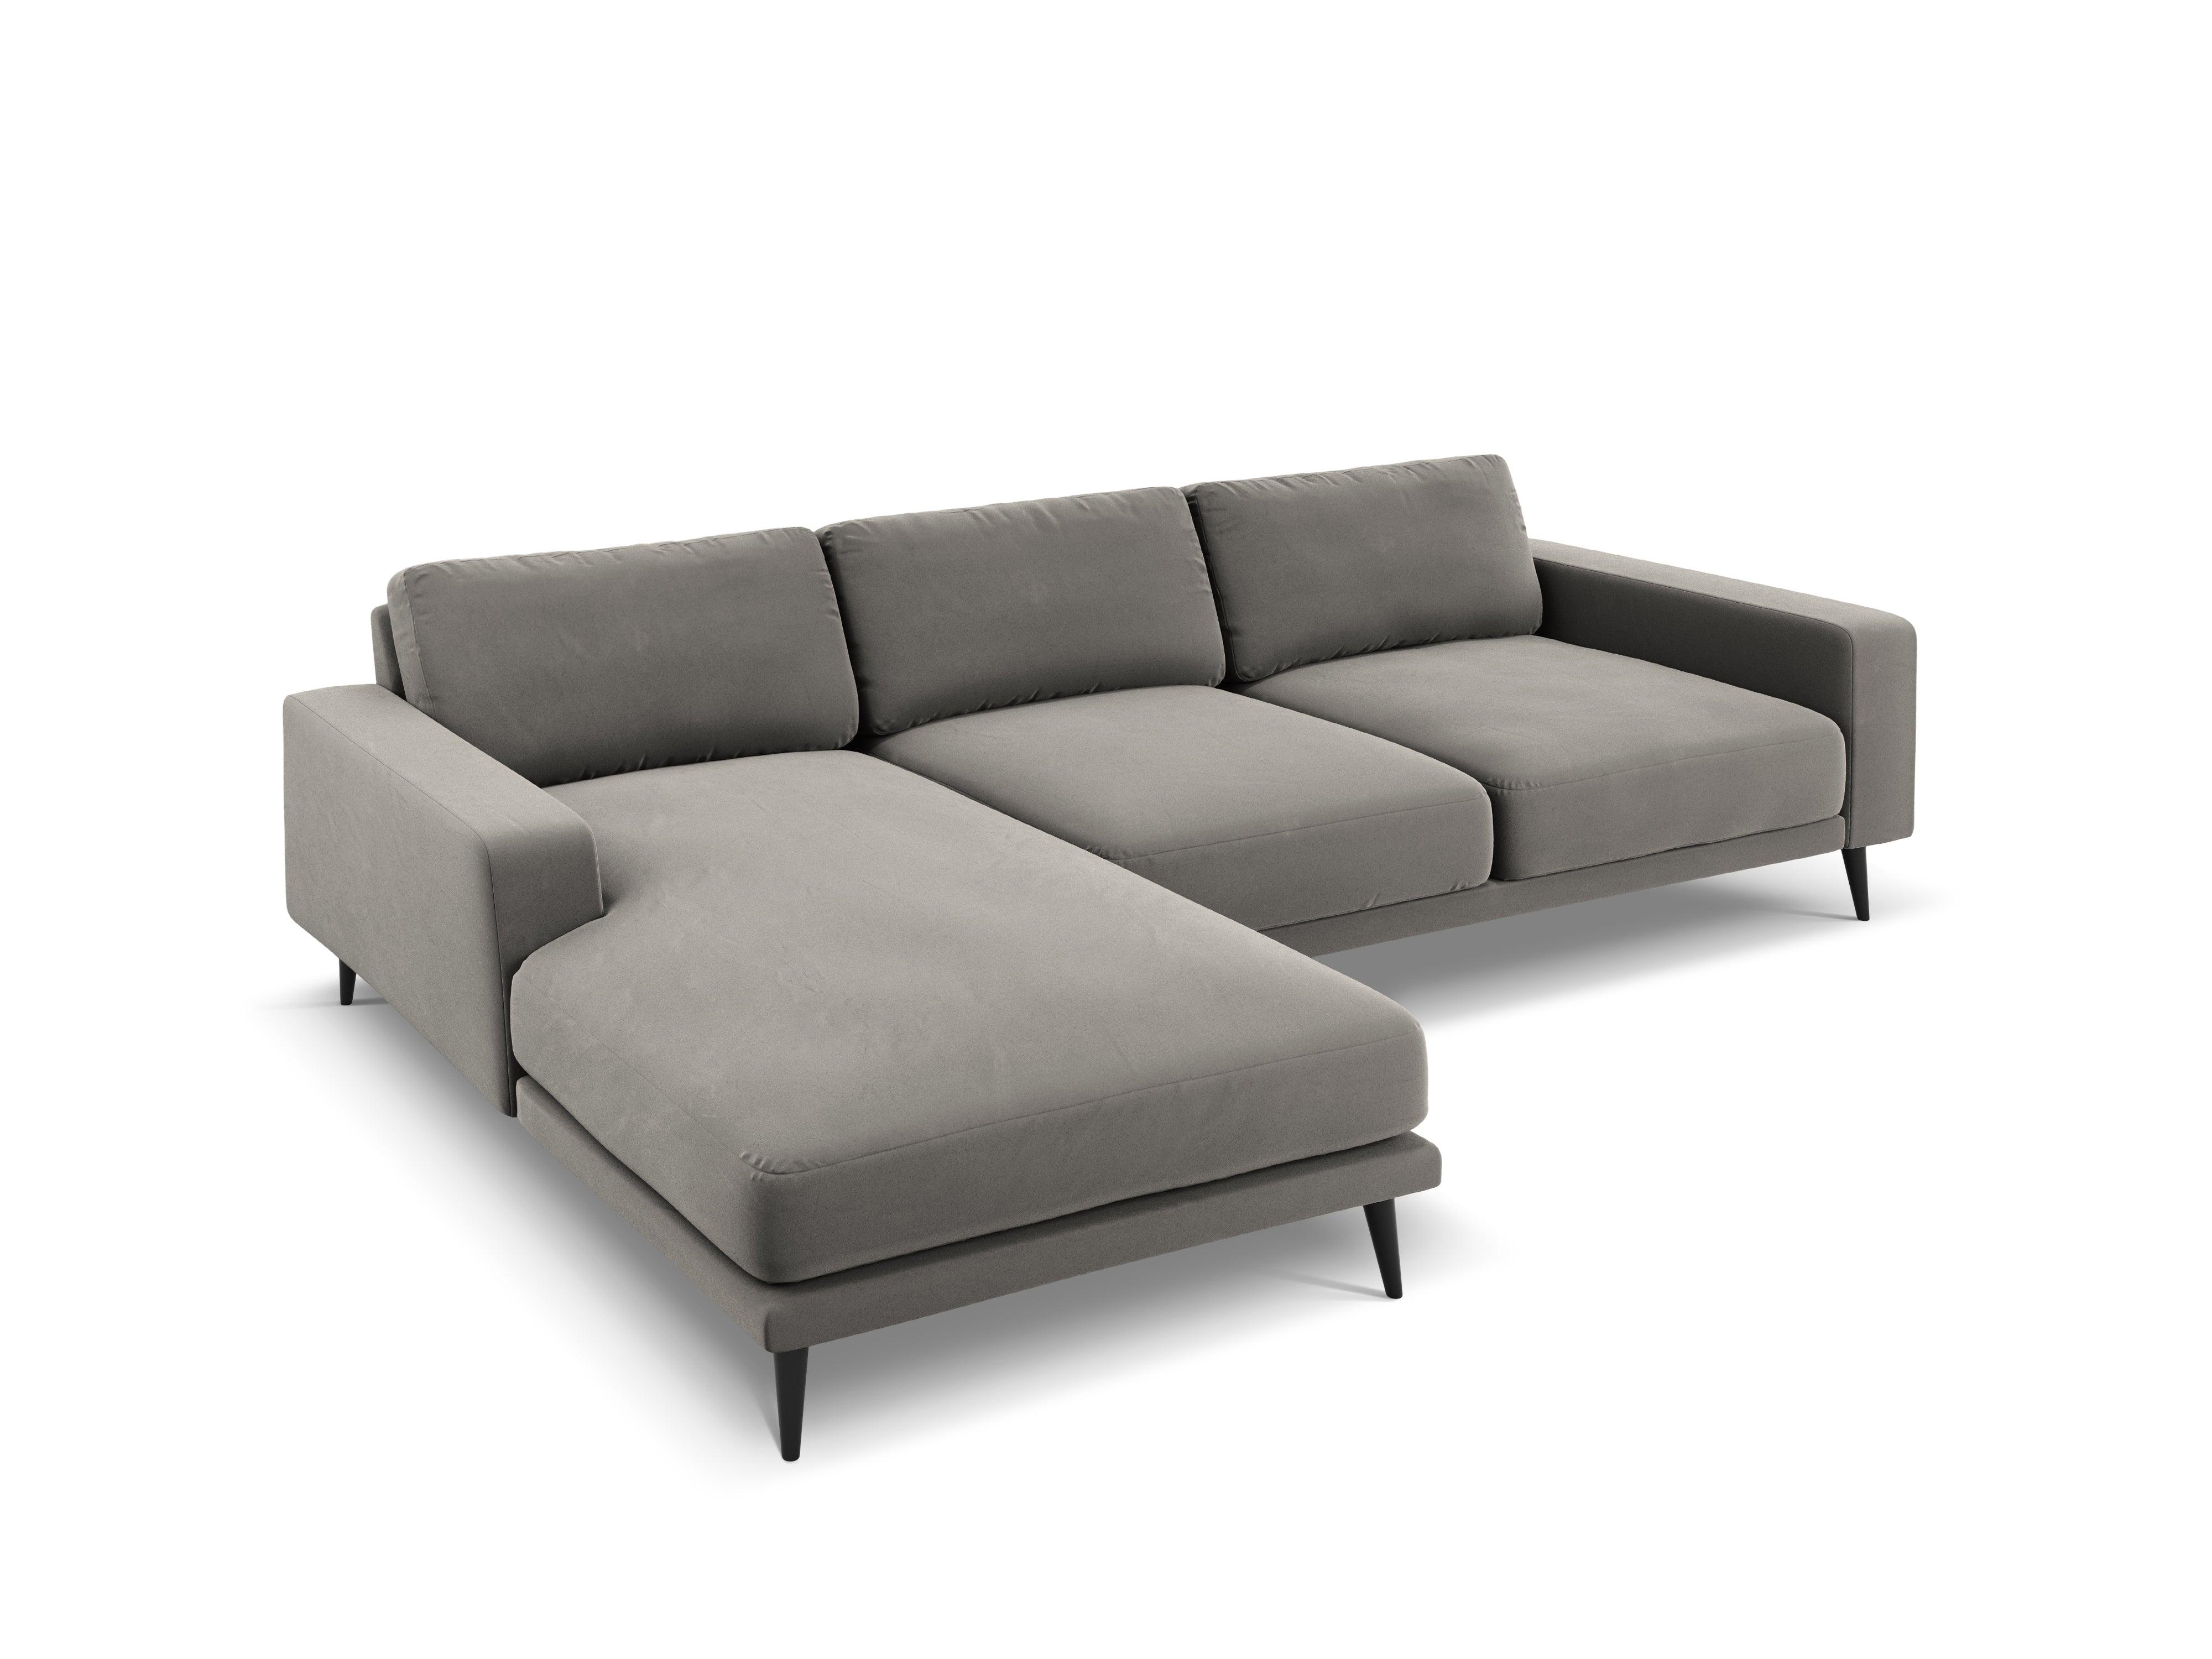 Velvet Left Corner Sofa, "Kylie", 4 Seats, 232x160x80
Made in Europe, Micadoni, Eye on Design